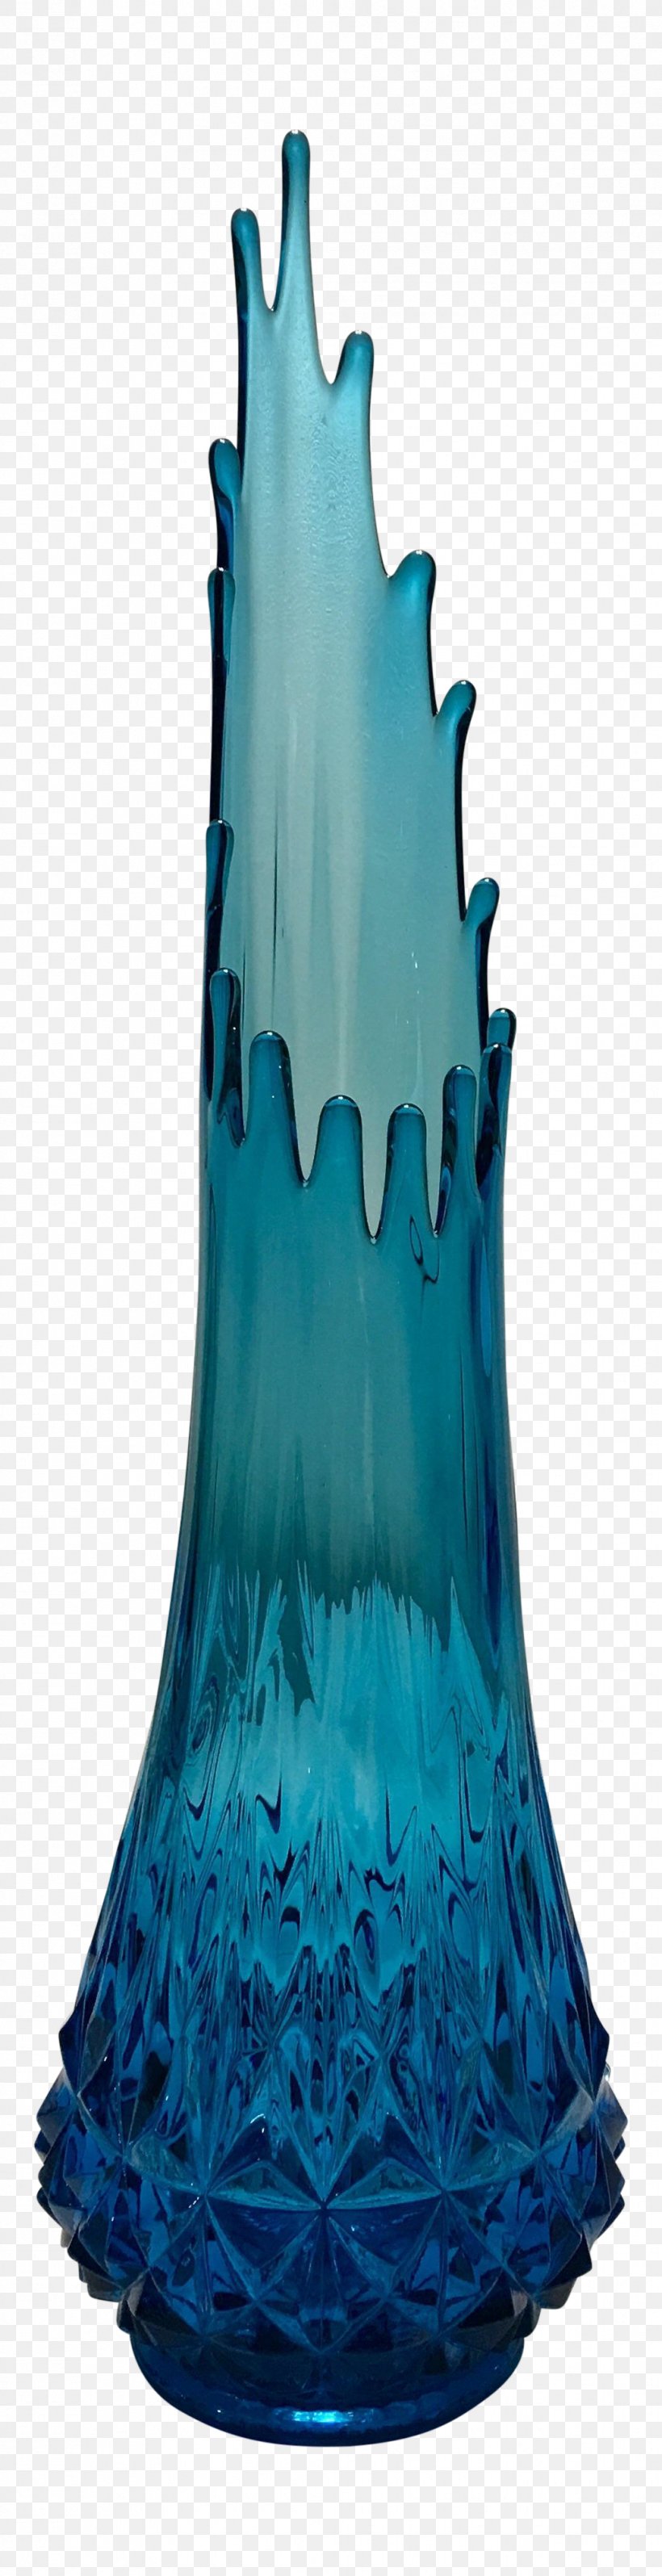 Vase Glass Blue Chairish Vikings, PNG, 1031x4013px, Vase, Aqua, Architecture, Blue, Chairish Download Free